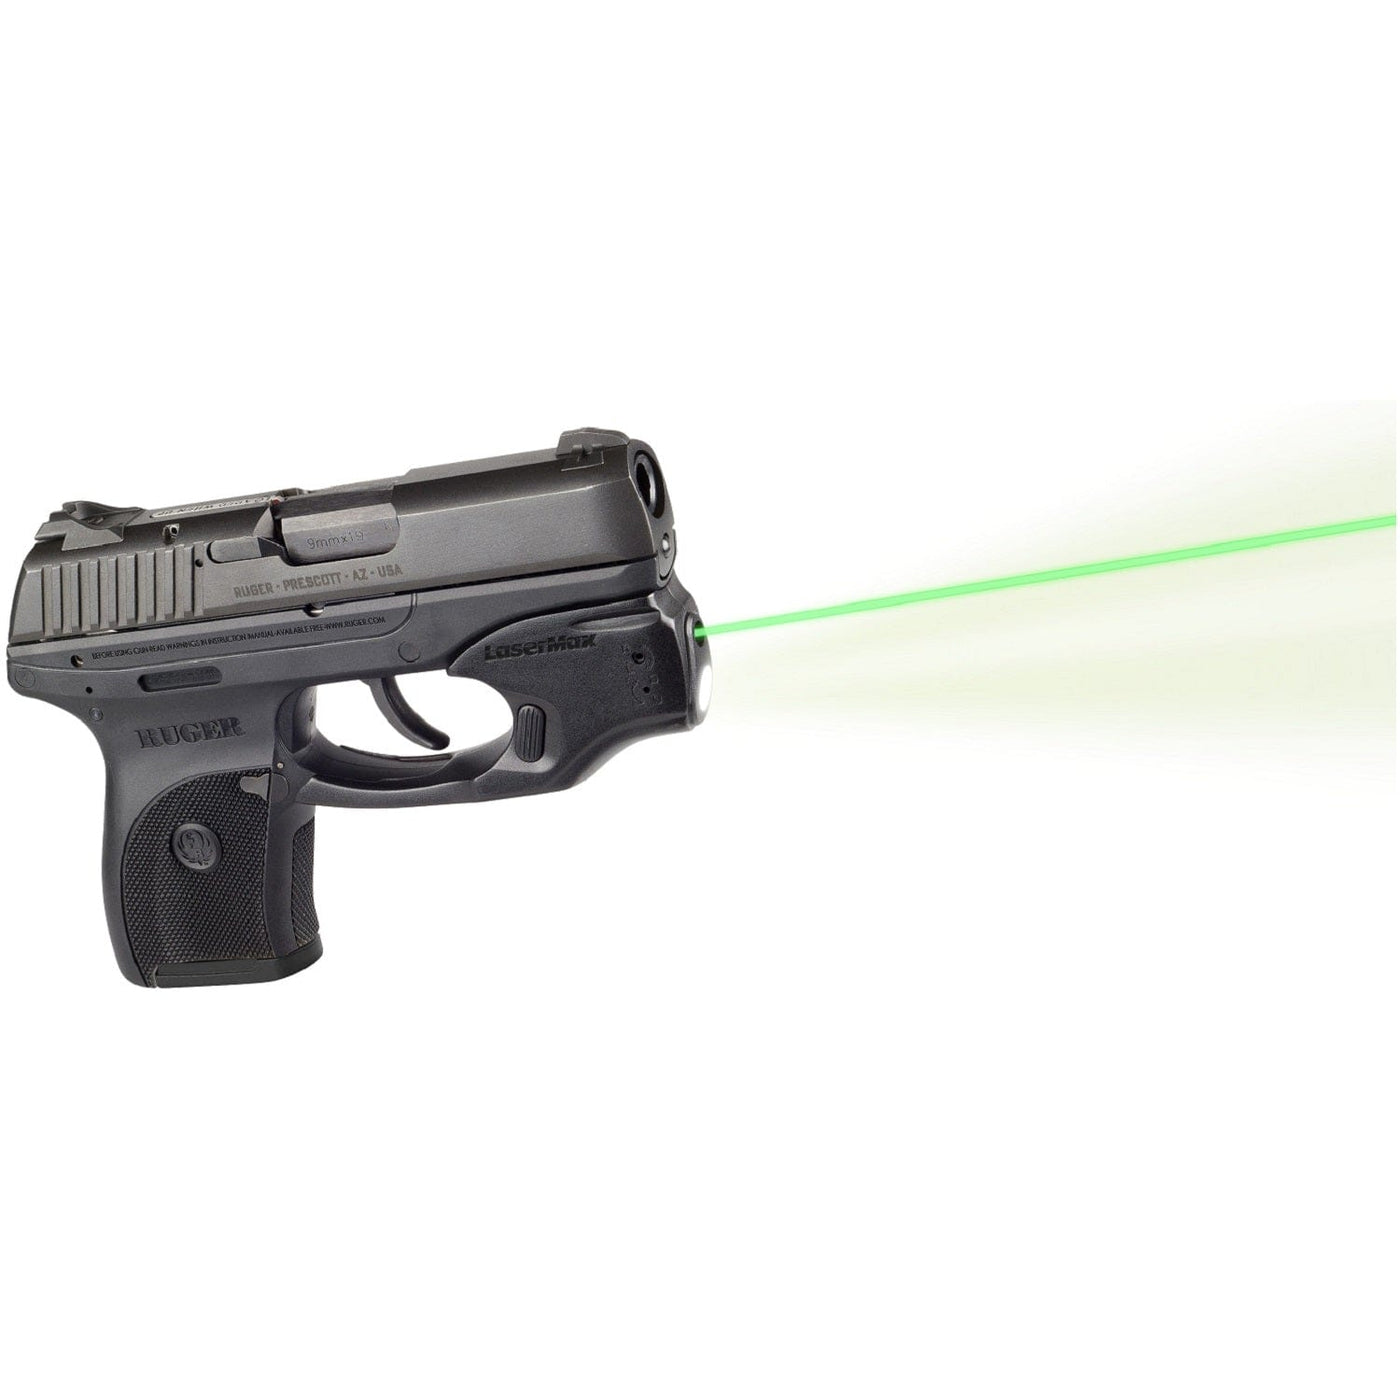 LaserMax LaserMax Centerfire Light Laser Green w Grip Sense Ruger LC Optics And Sights